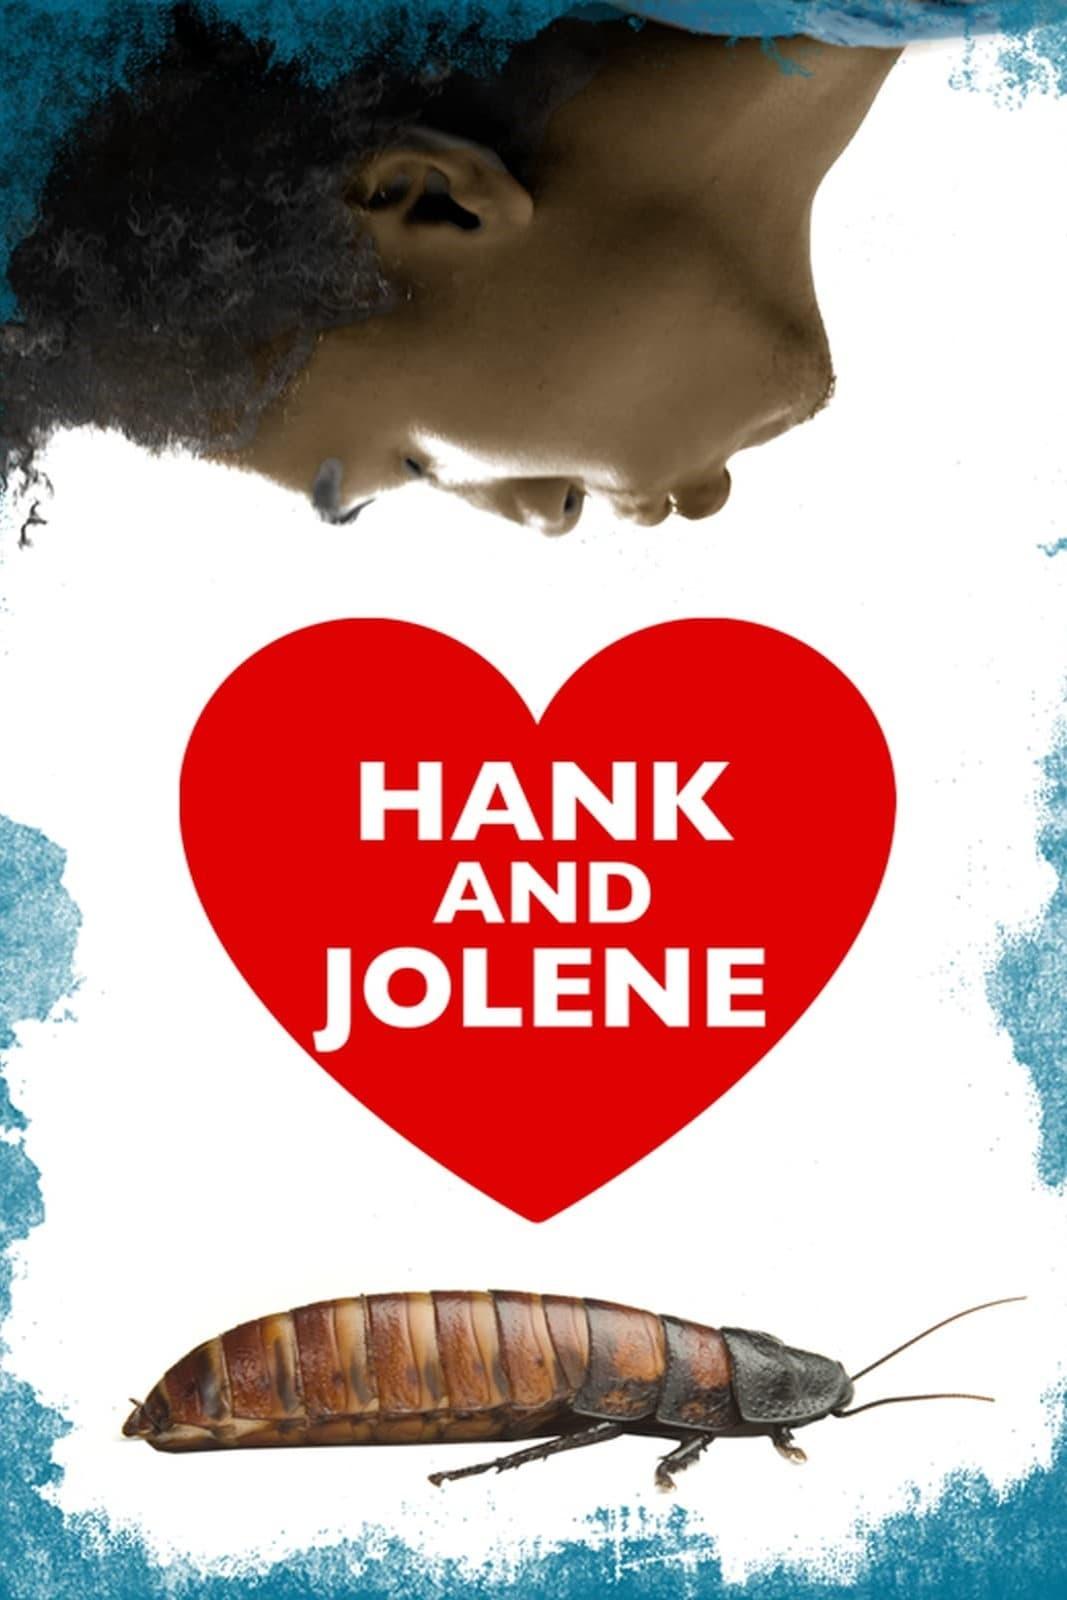 Hank and Jolene poster